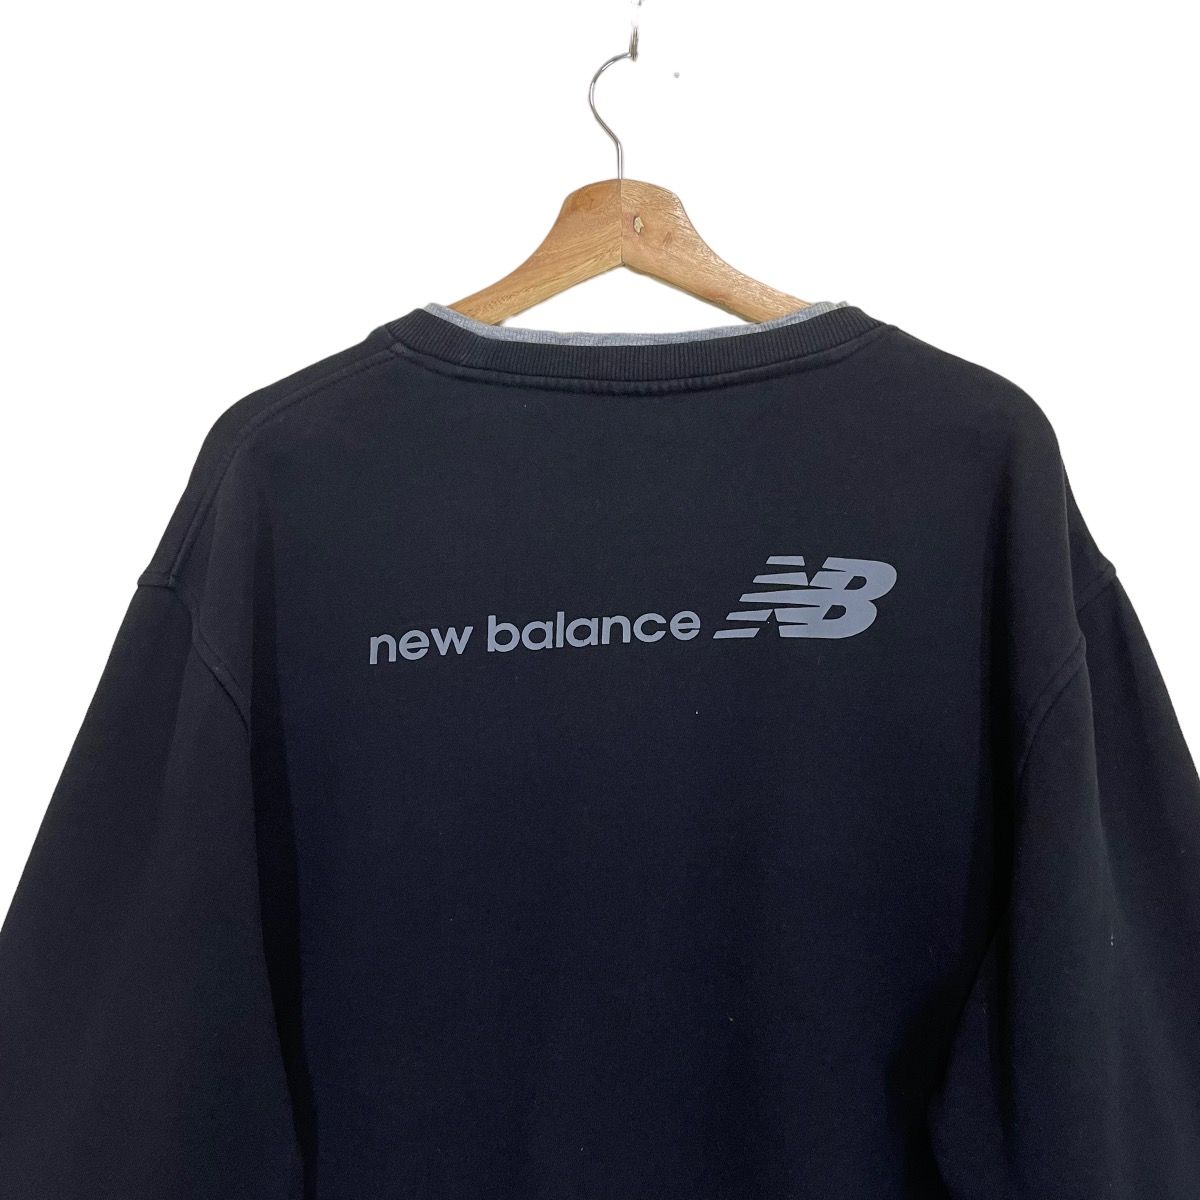 Vintage New Balance Crewneck Sweatshirt Size XL - 4